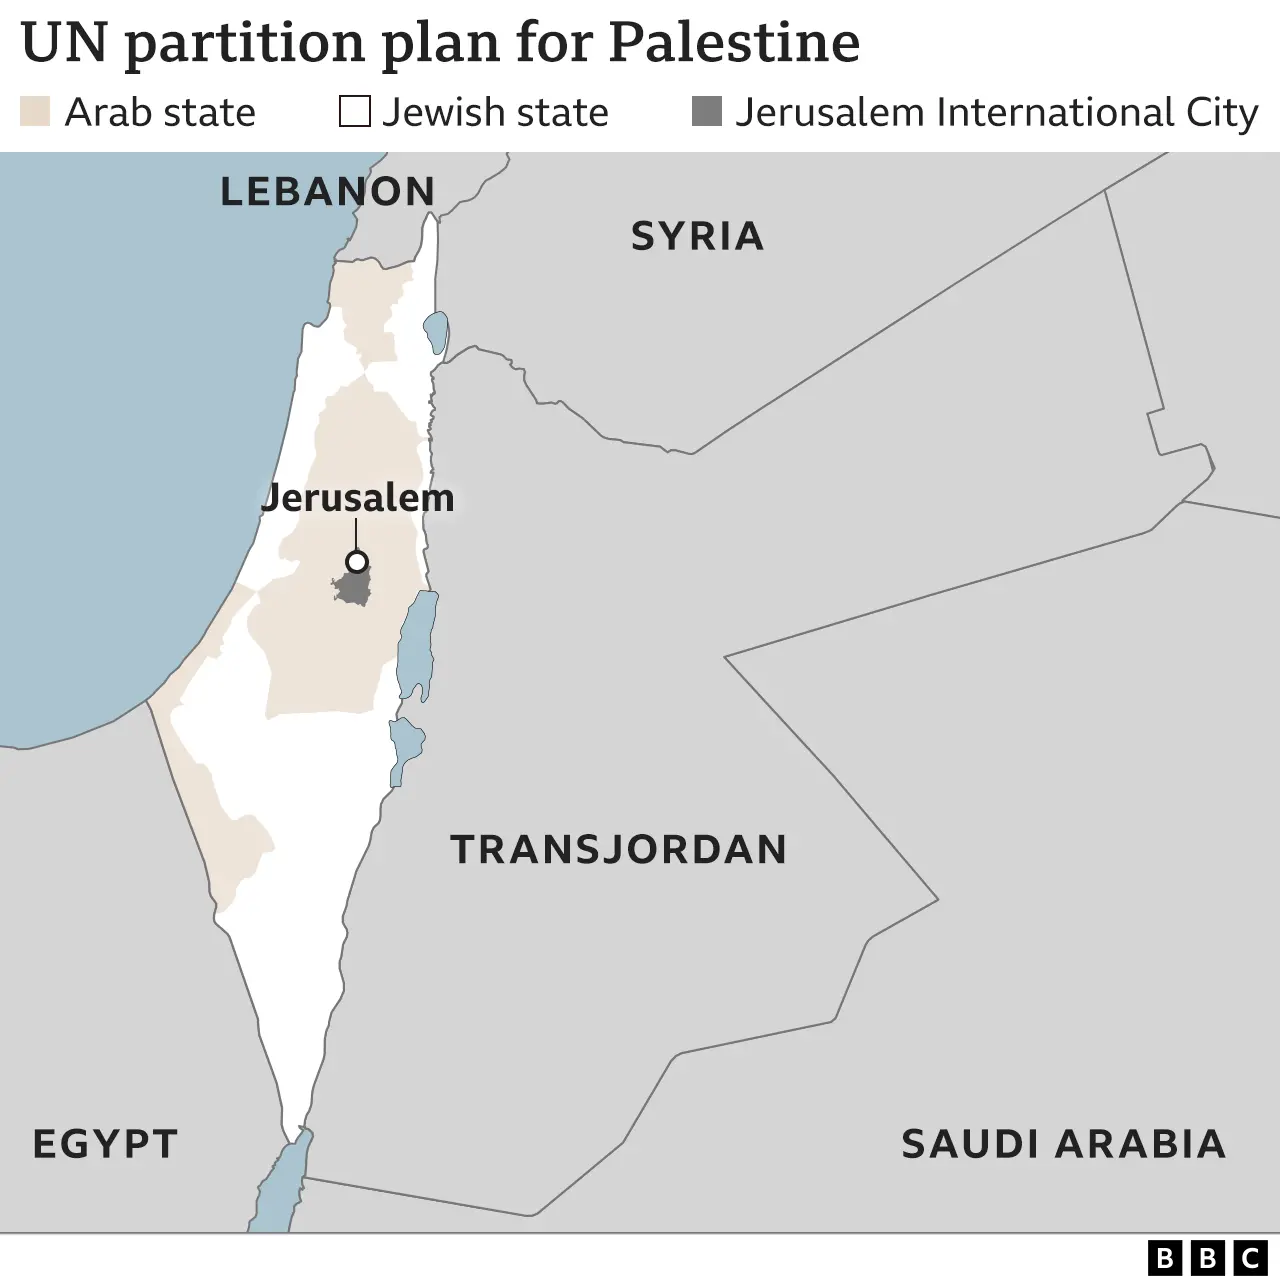 Map showing UN partition plan for Palestine